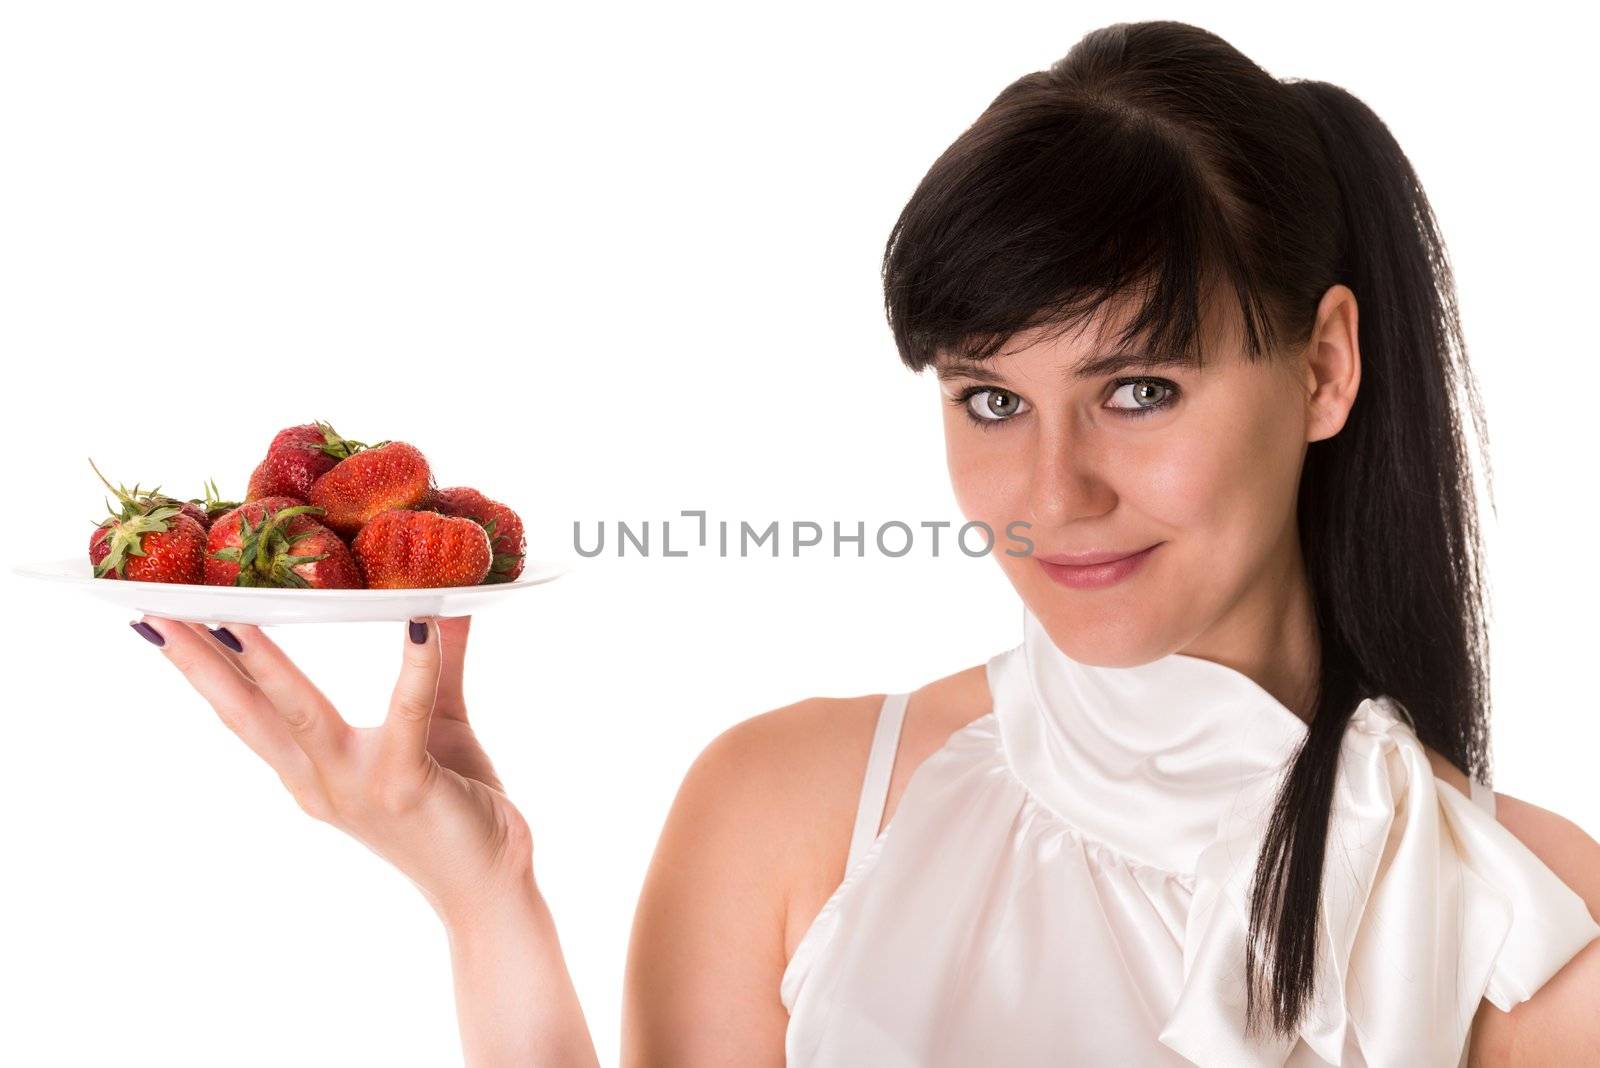 Playful woman with strawberries on plate by iryna_rasko